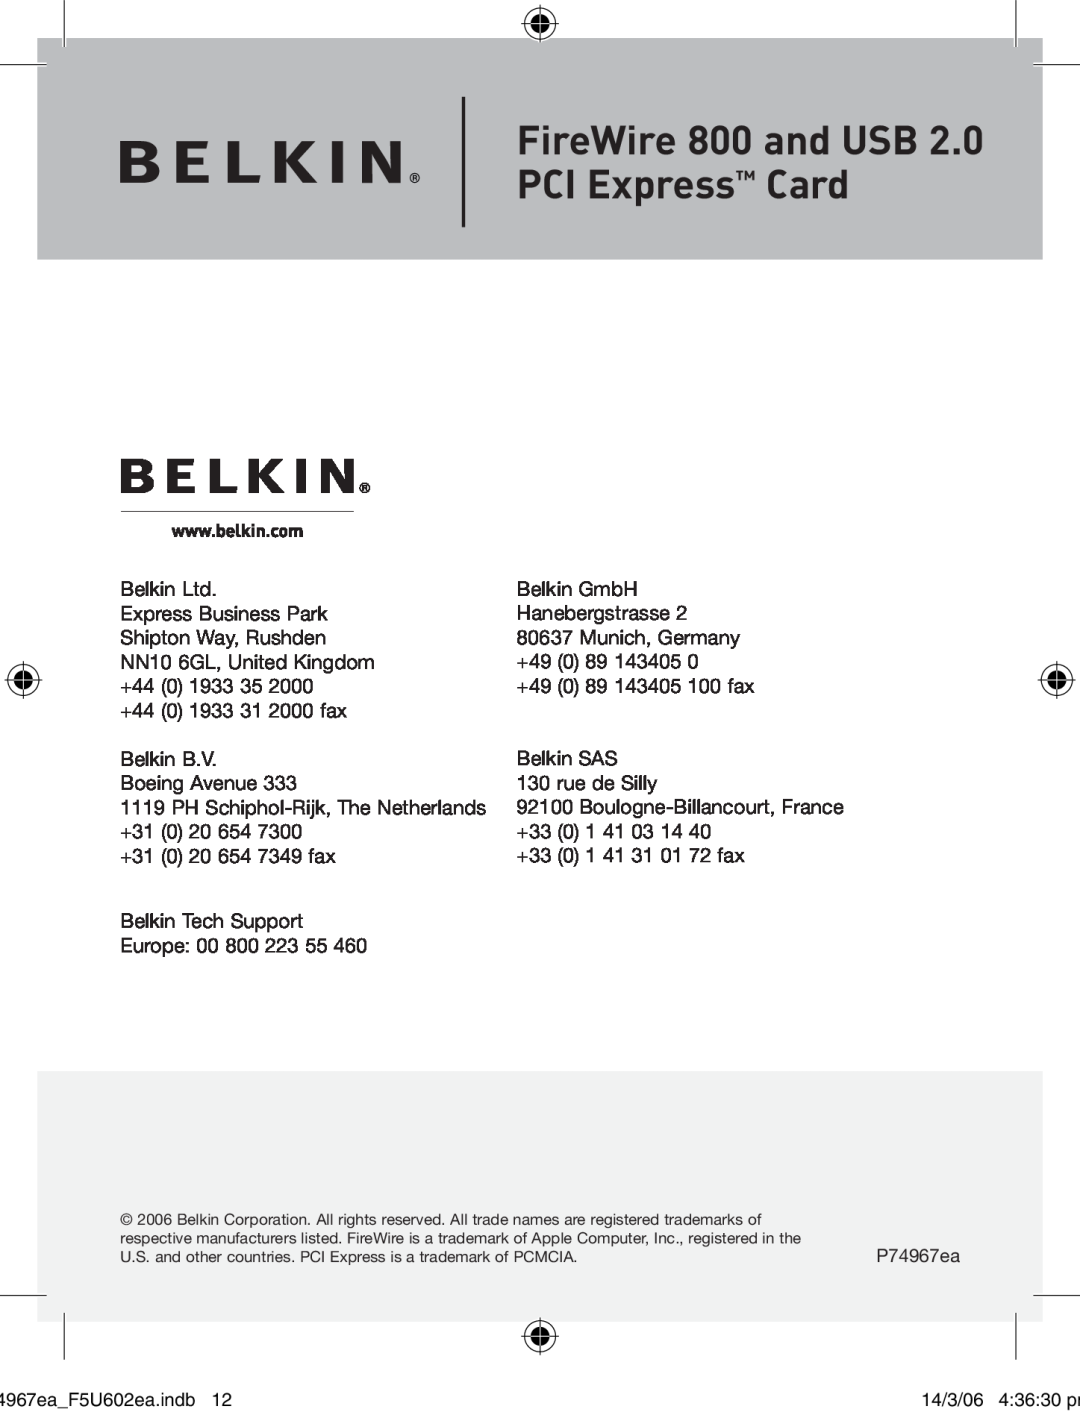 Belkin F5U602EA user manual FireWire 800 and USB PCI Express Card, Belkin GmbH 